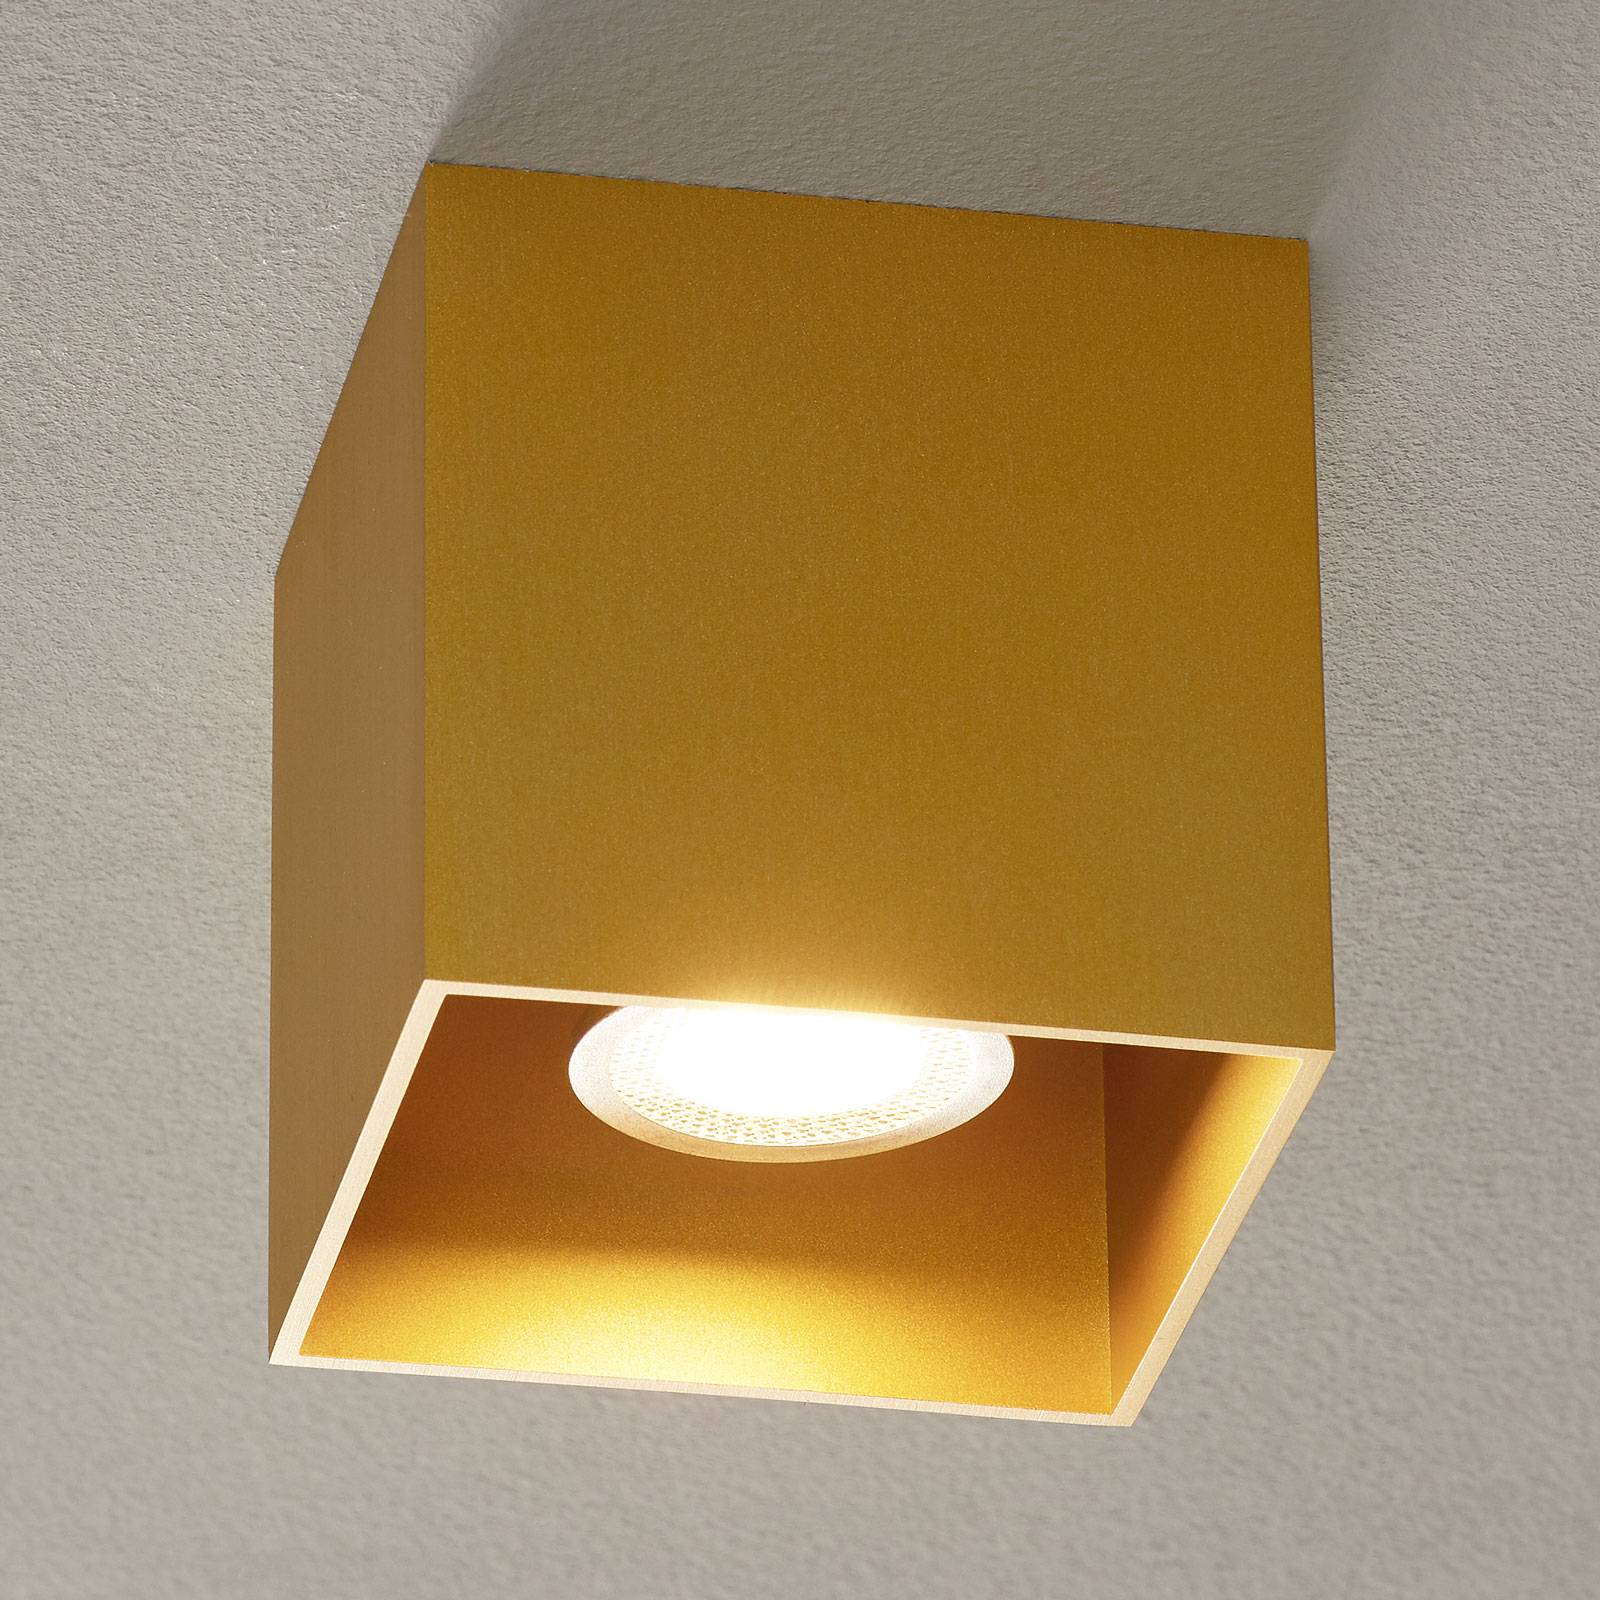 Wever & ducré lighting wever & ducré box 1.0 par16 mennyezeti lámpa arany színben